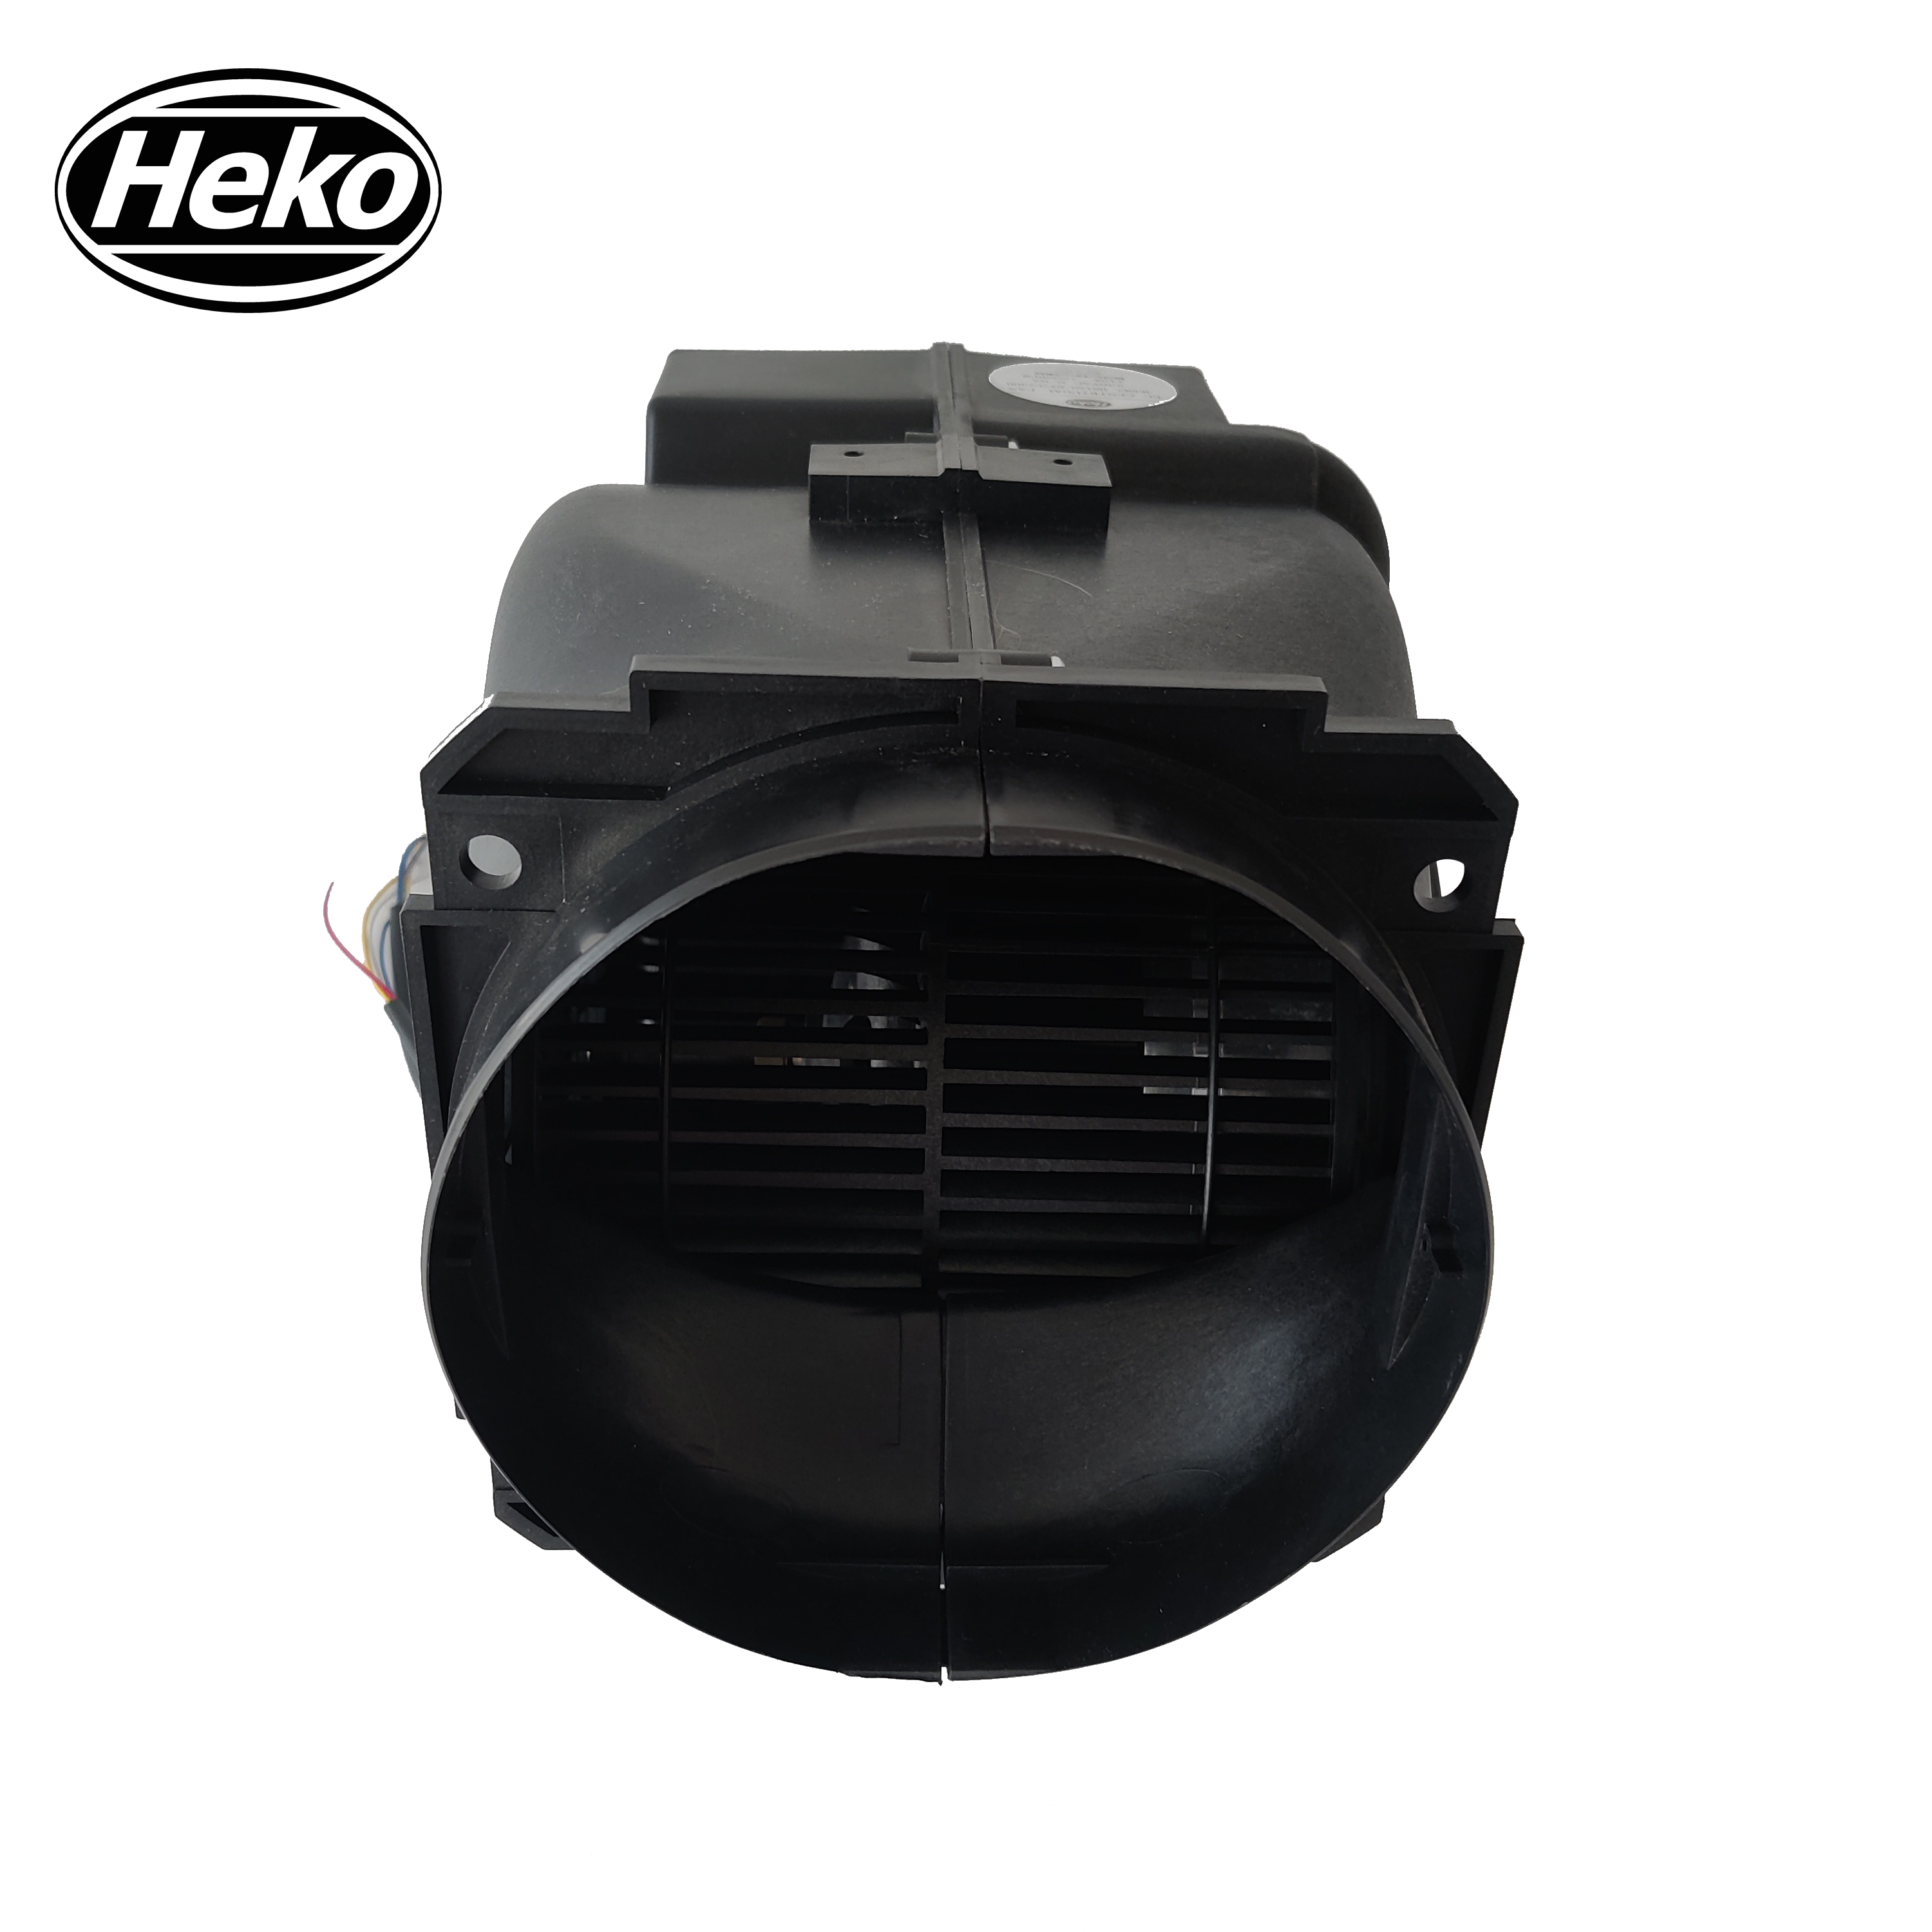 HEKO EC150mm Power Saving Air Conditioner Blower Fan